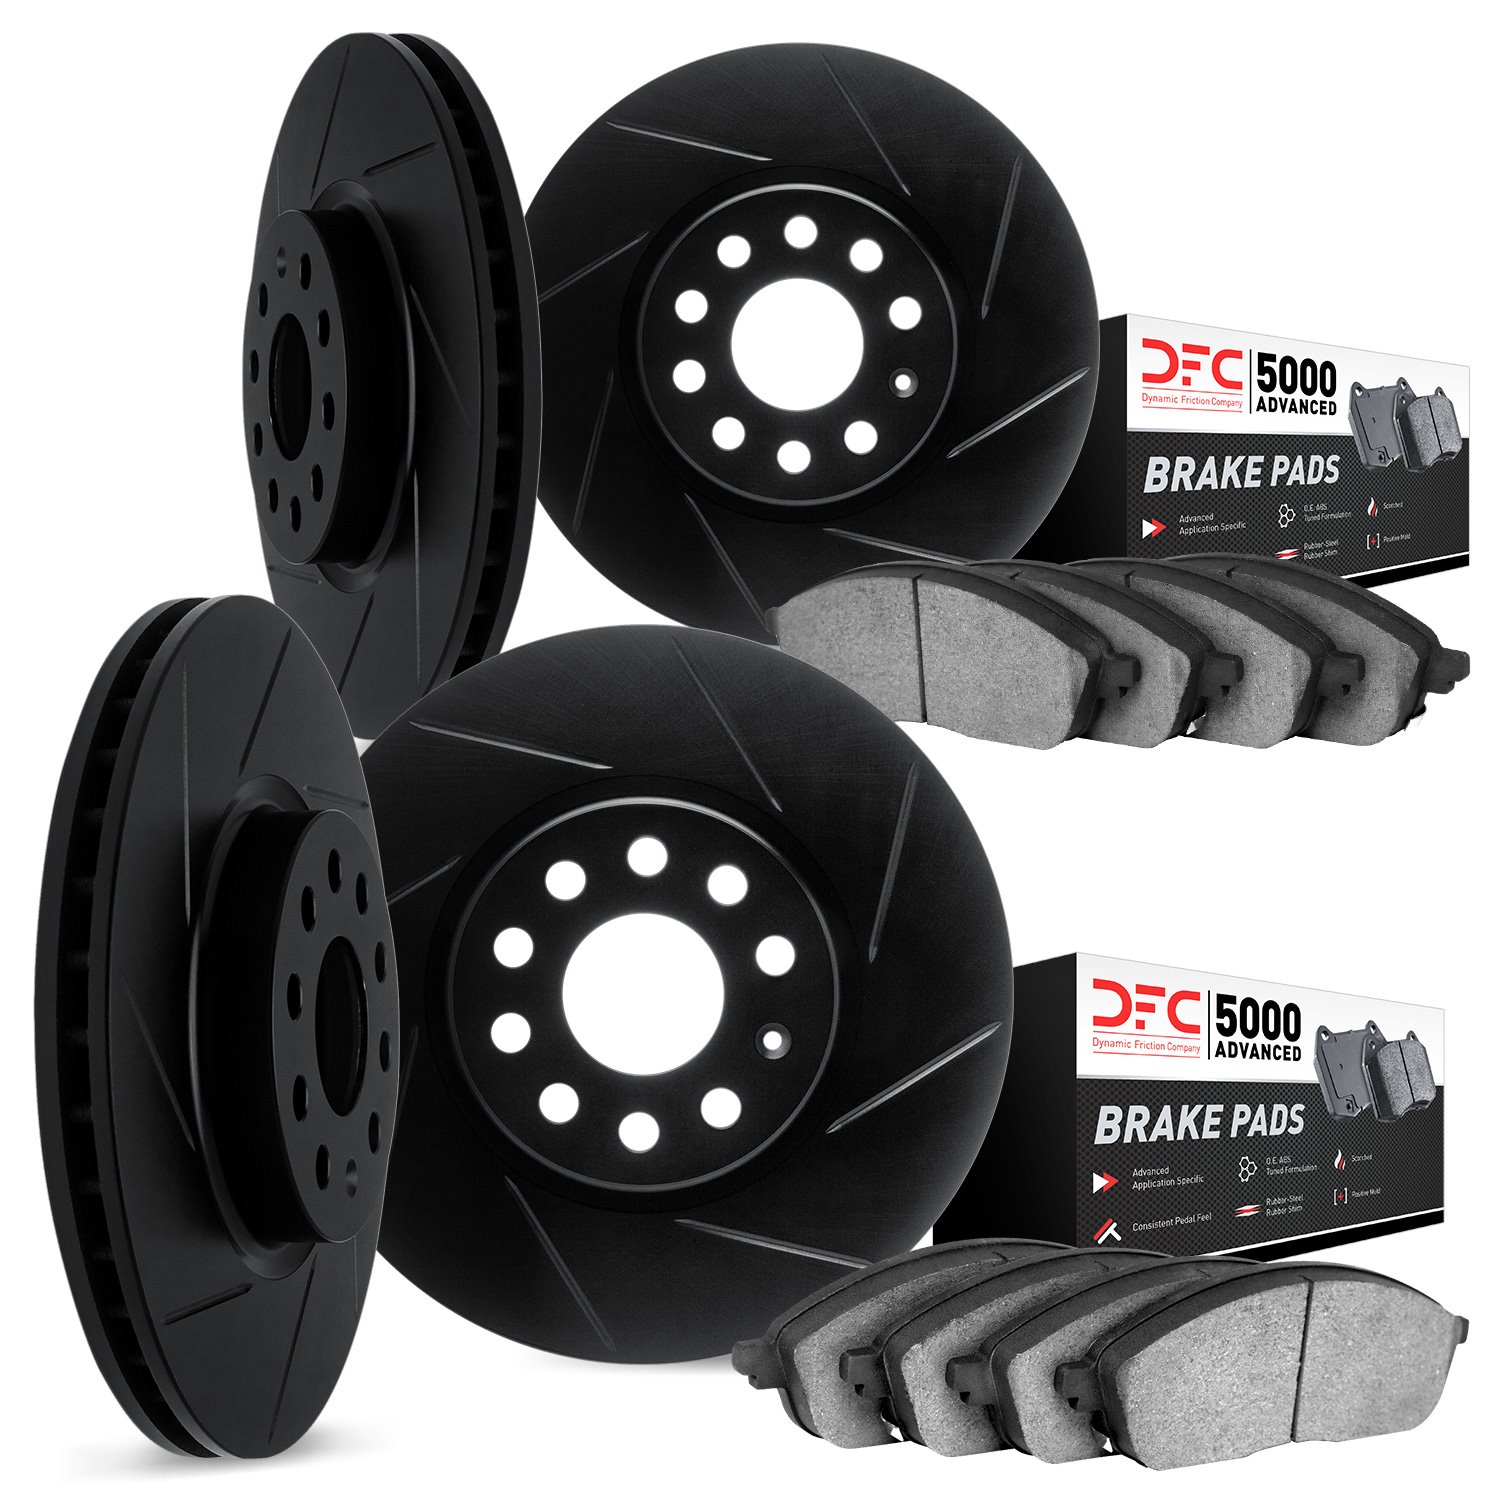 3514-67067 Slotted Brake Rotors w/5000 Advanced Brake Pads Kit & Hardware [Black], 2014-2017 Infiniti/Nissan, Position: Front an